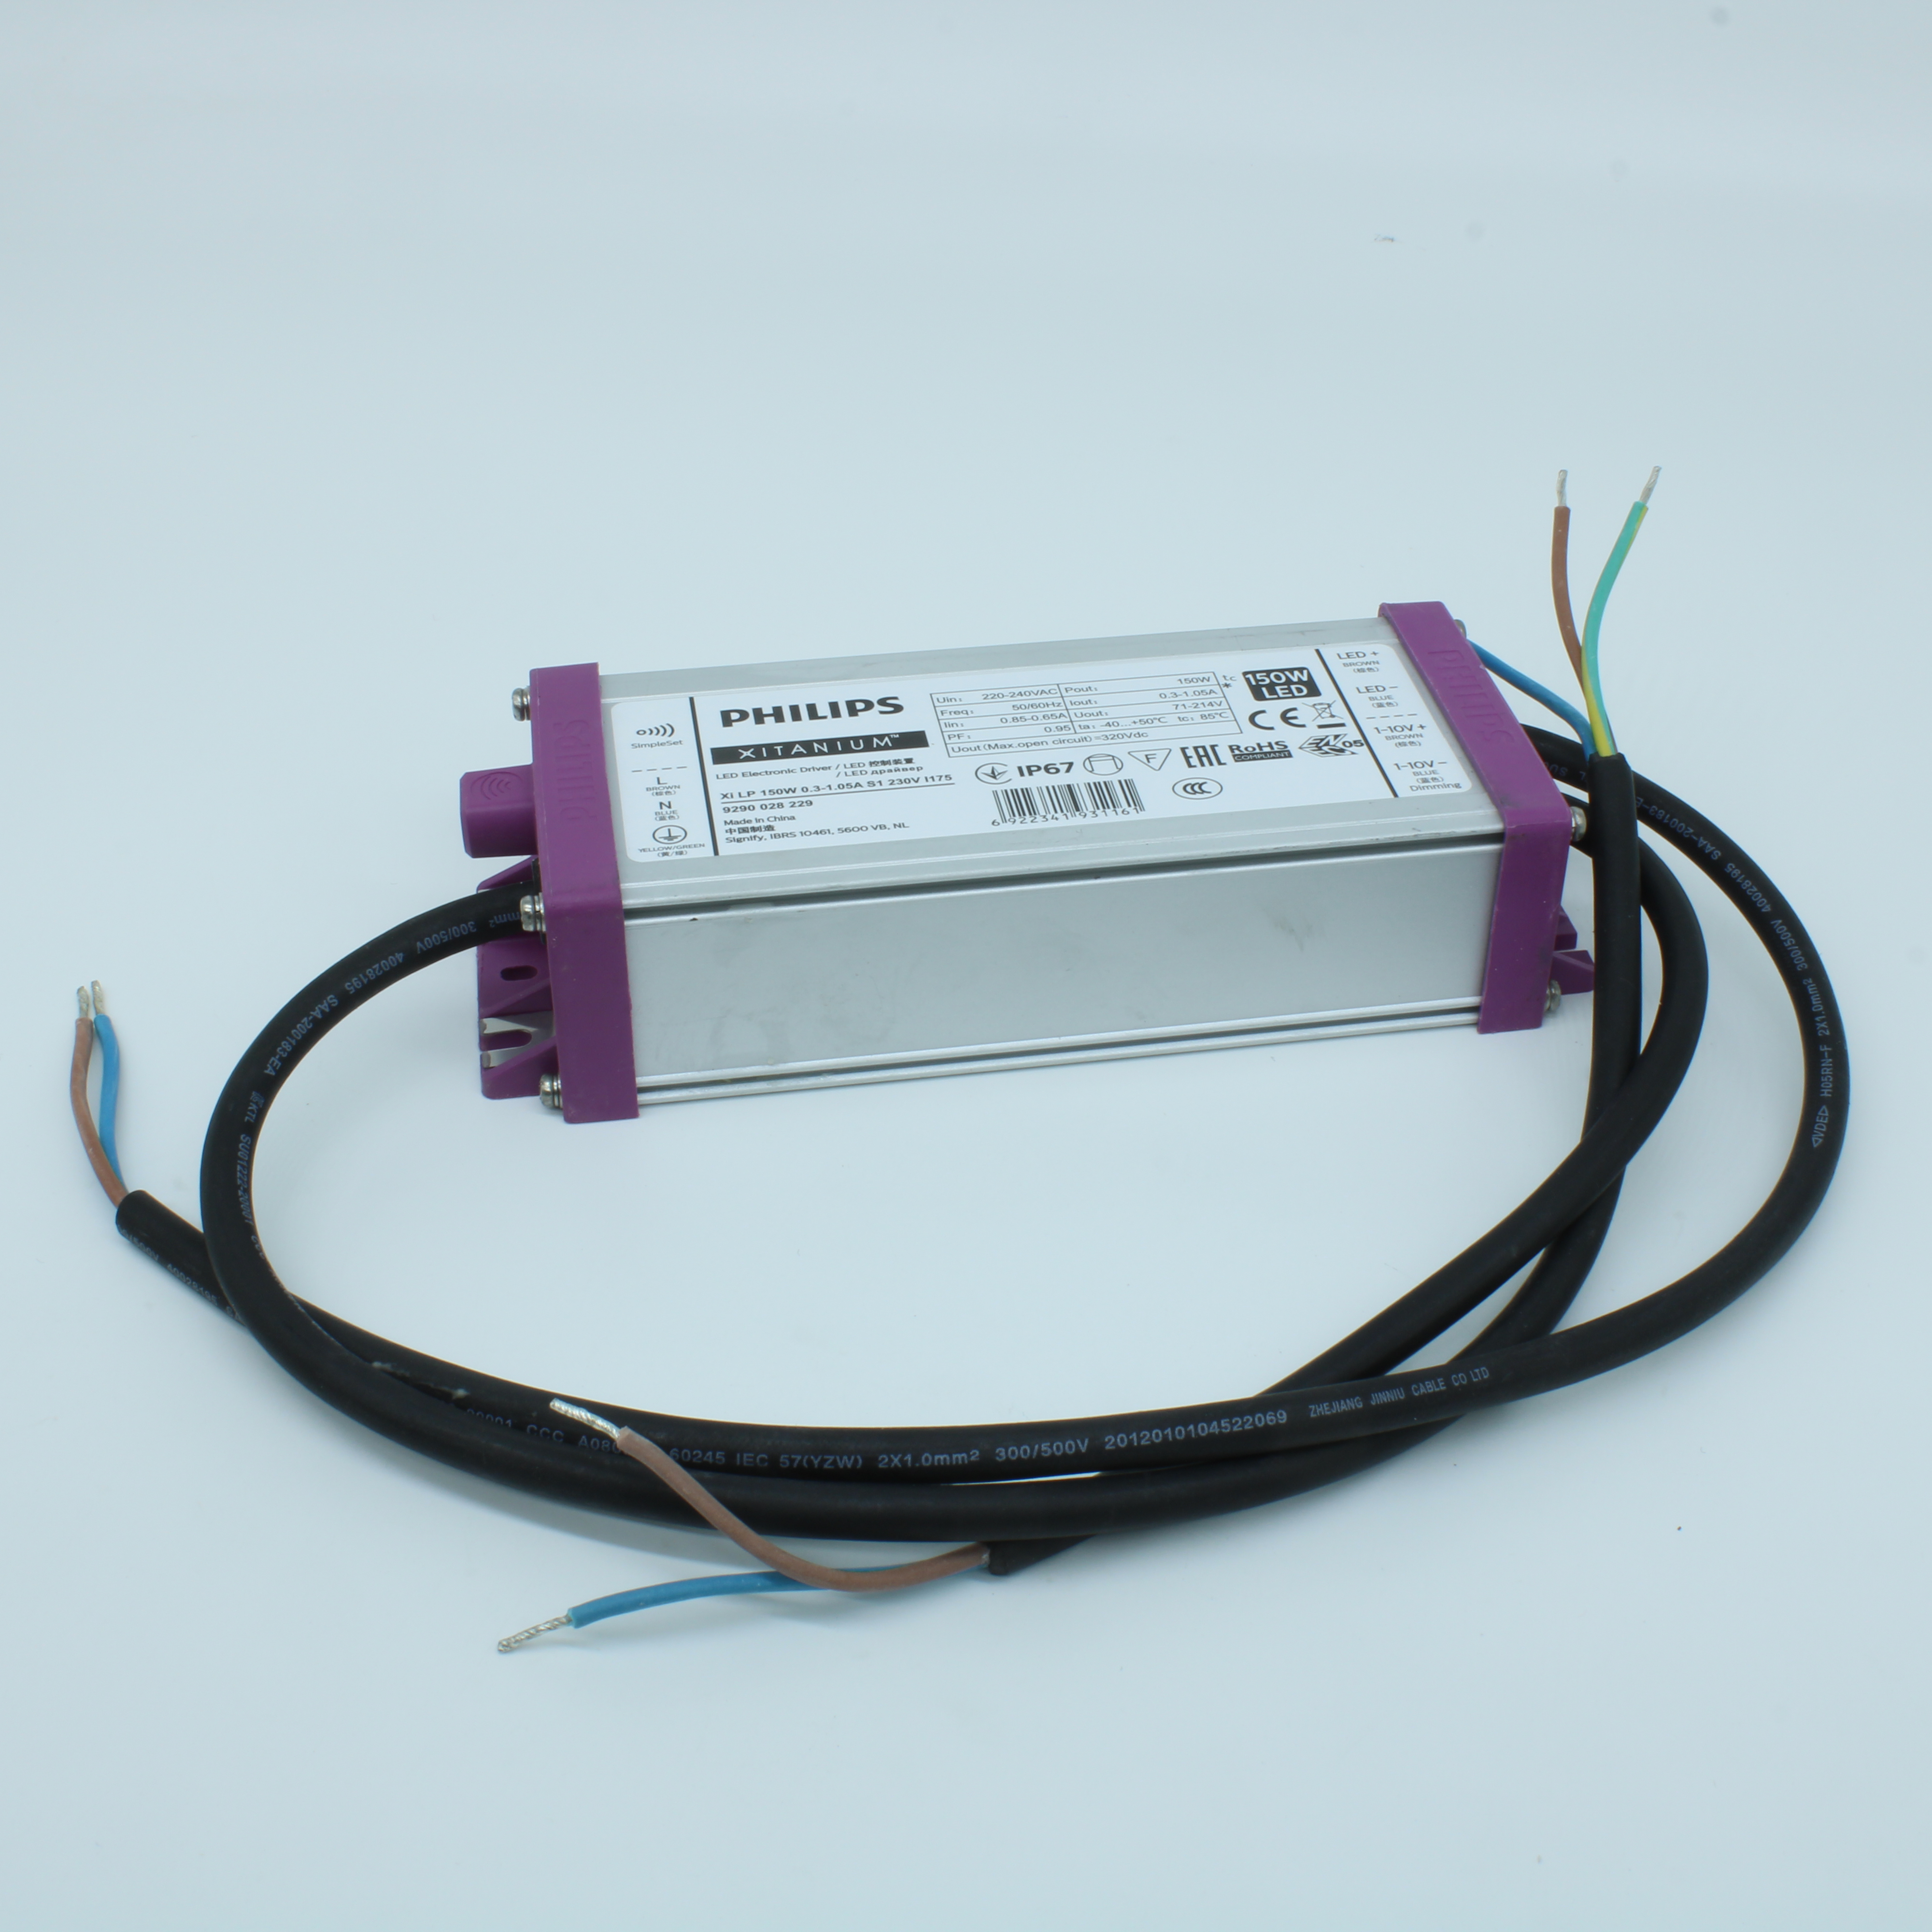 Драйверы для светодиодов XI LP 150W 0.3-1.05A S1 230V I175 Philips Electronics